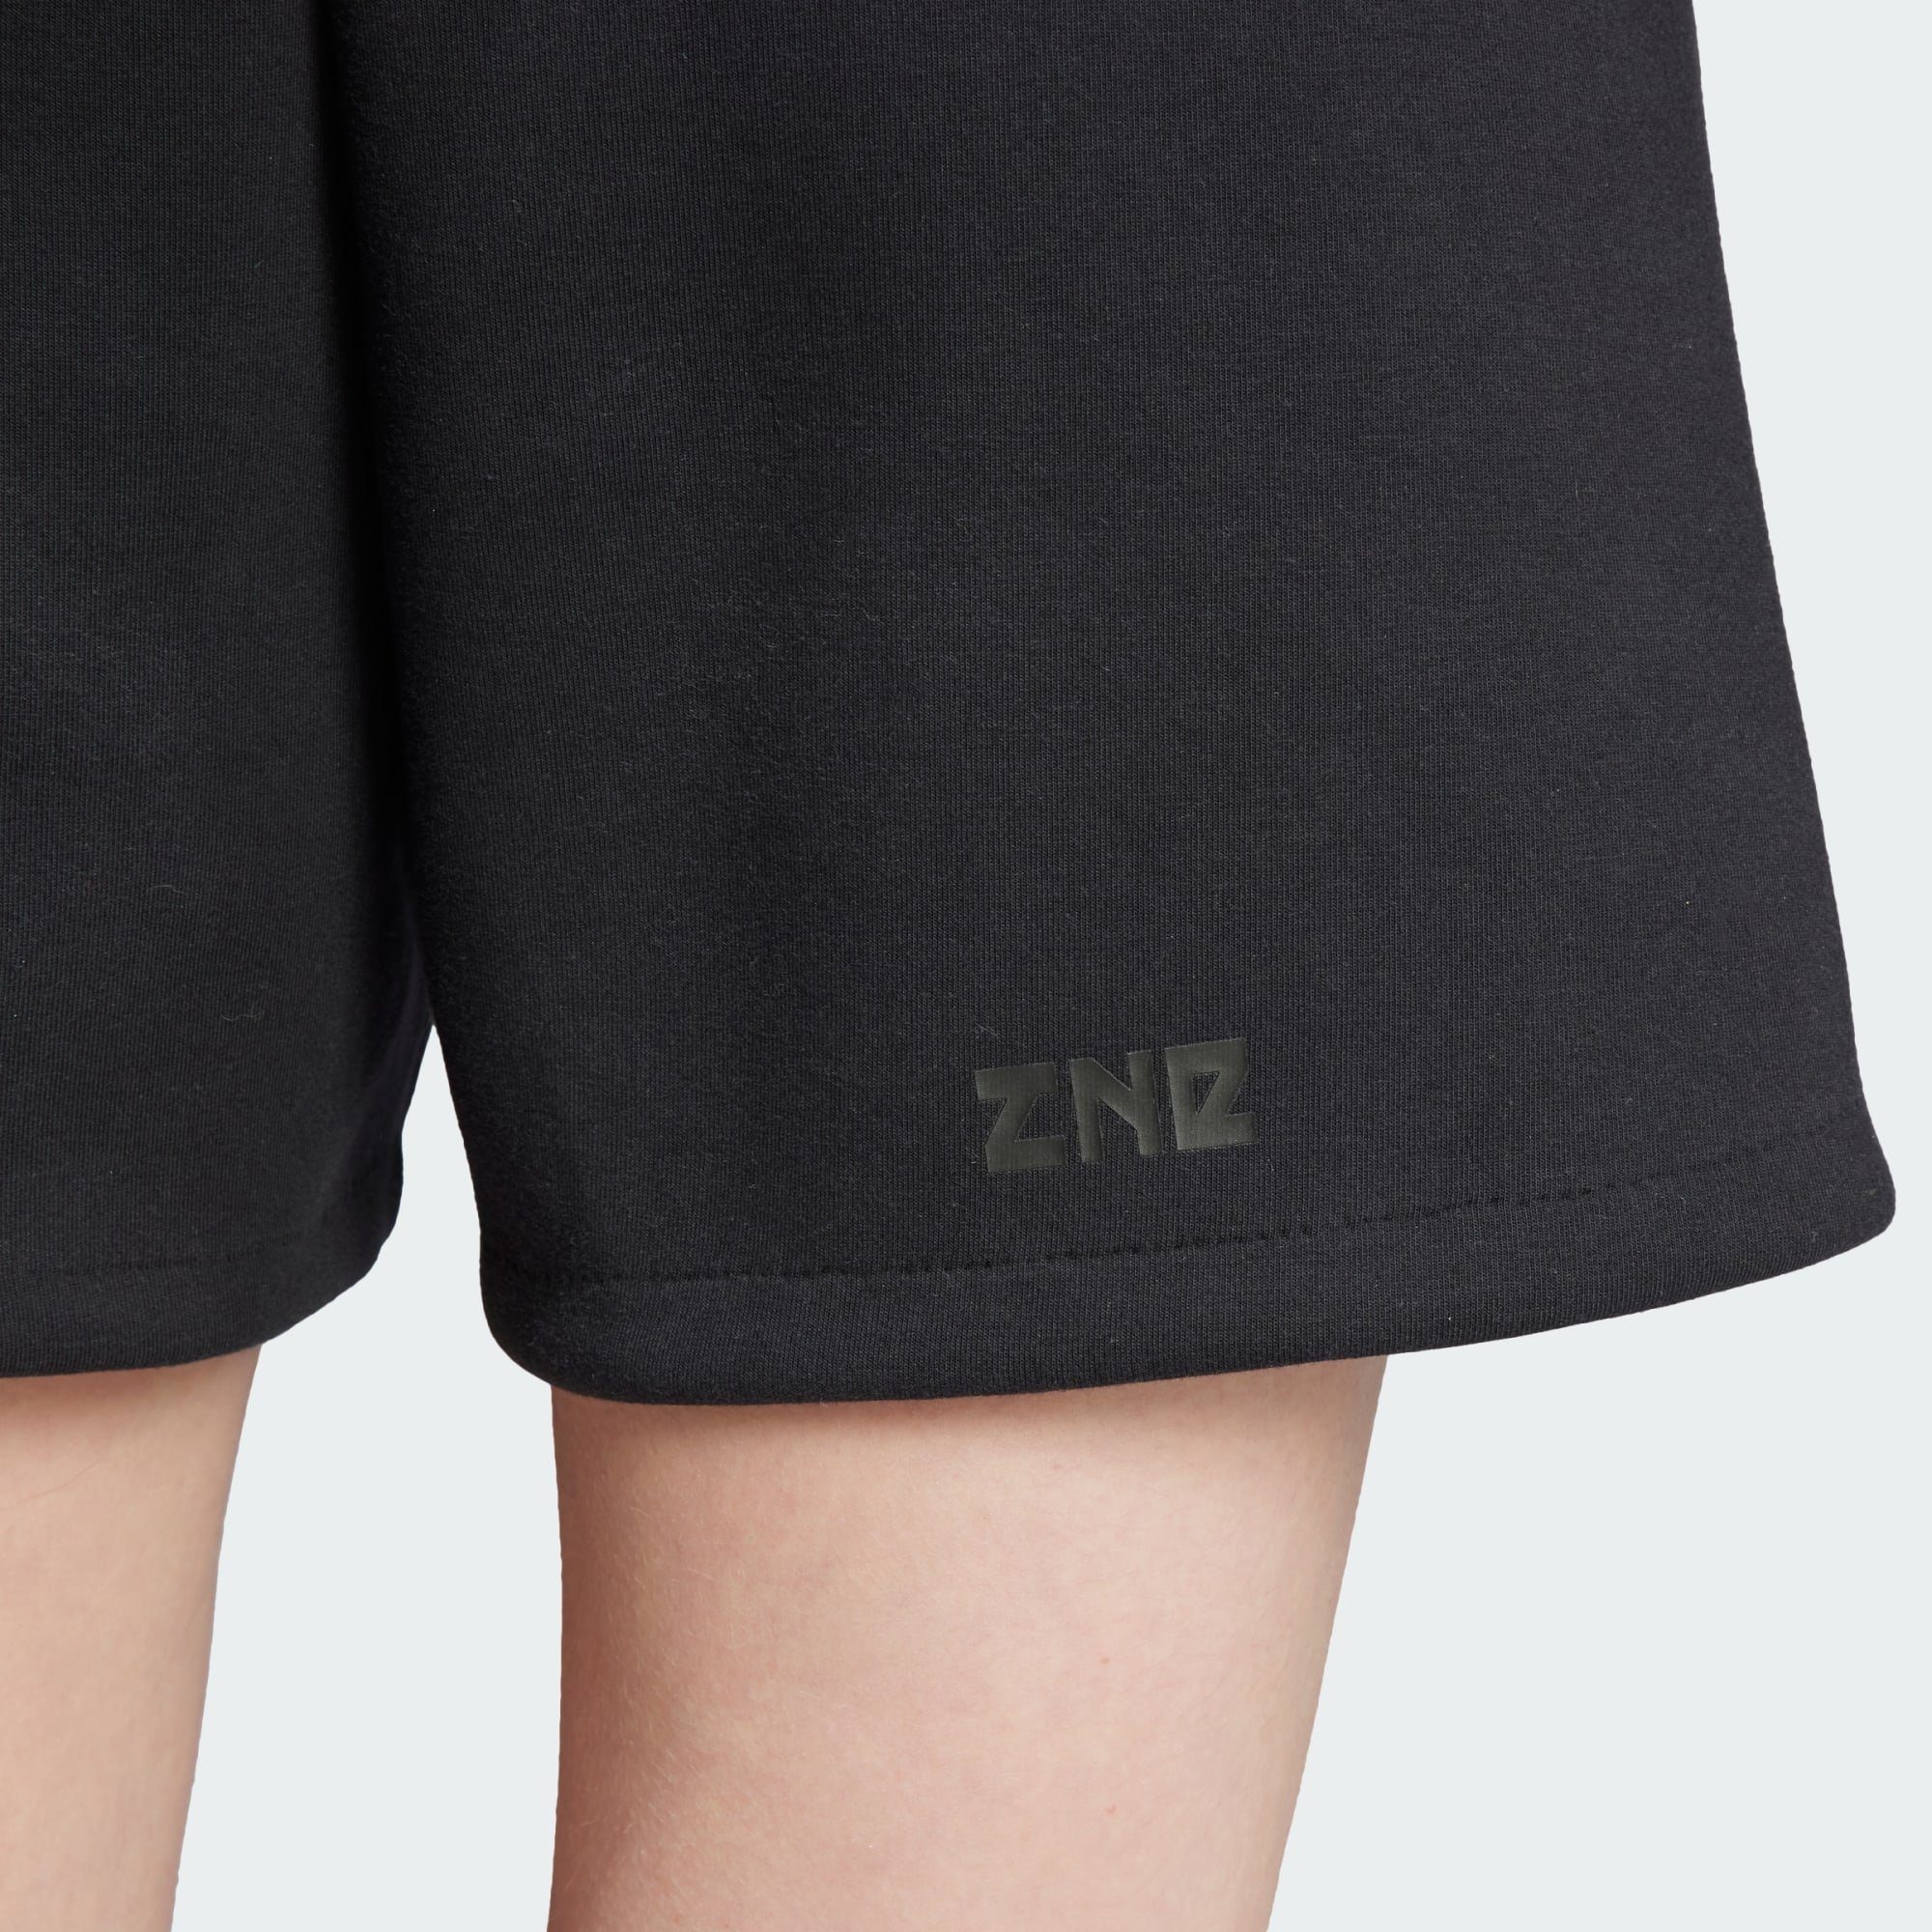 Z.N.E. Sportswear adidas Shorts SHORTS Black